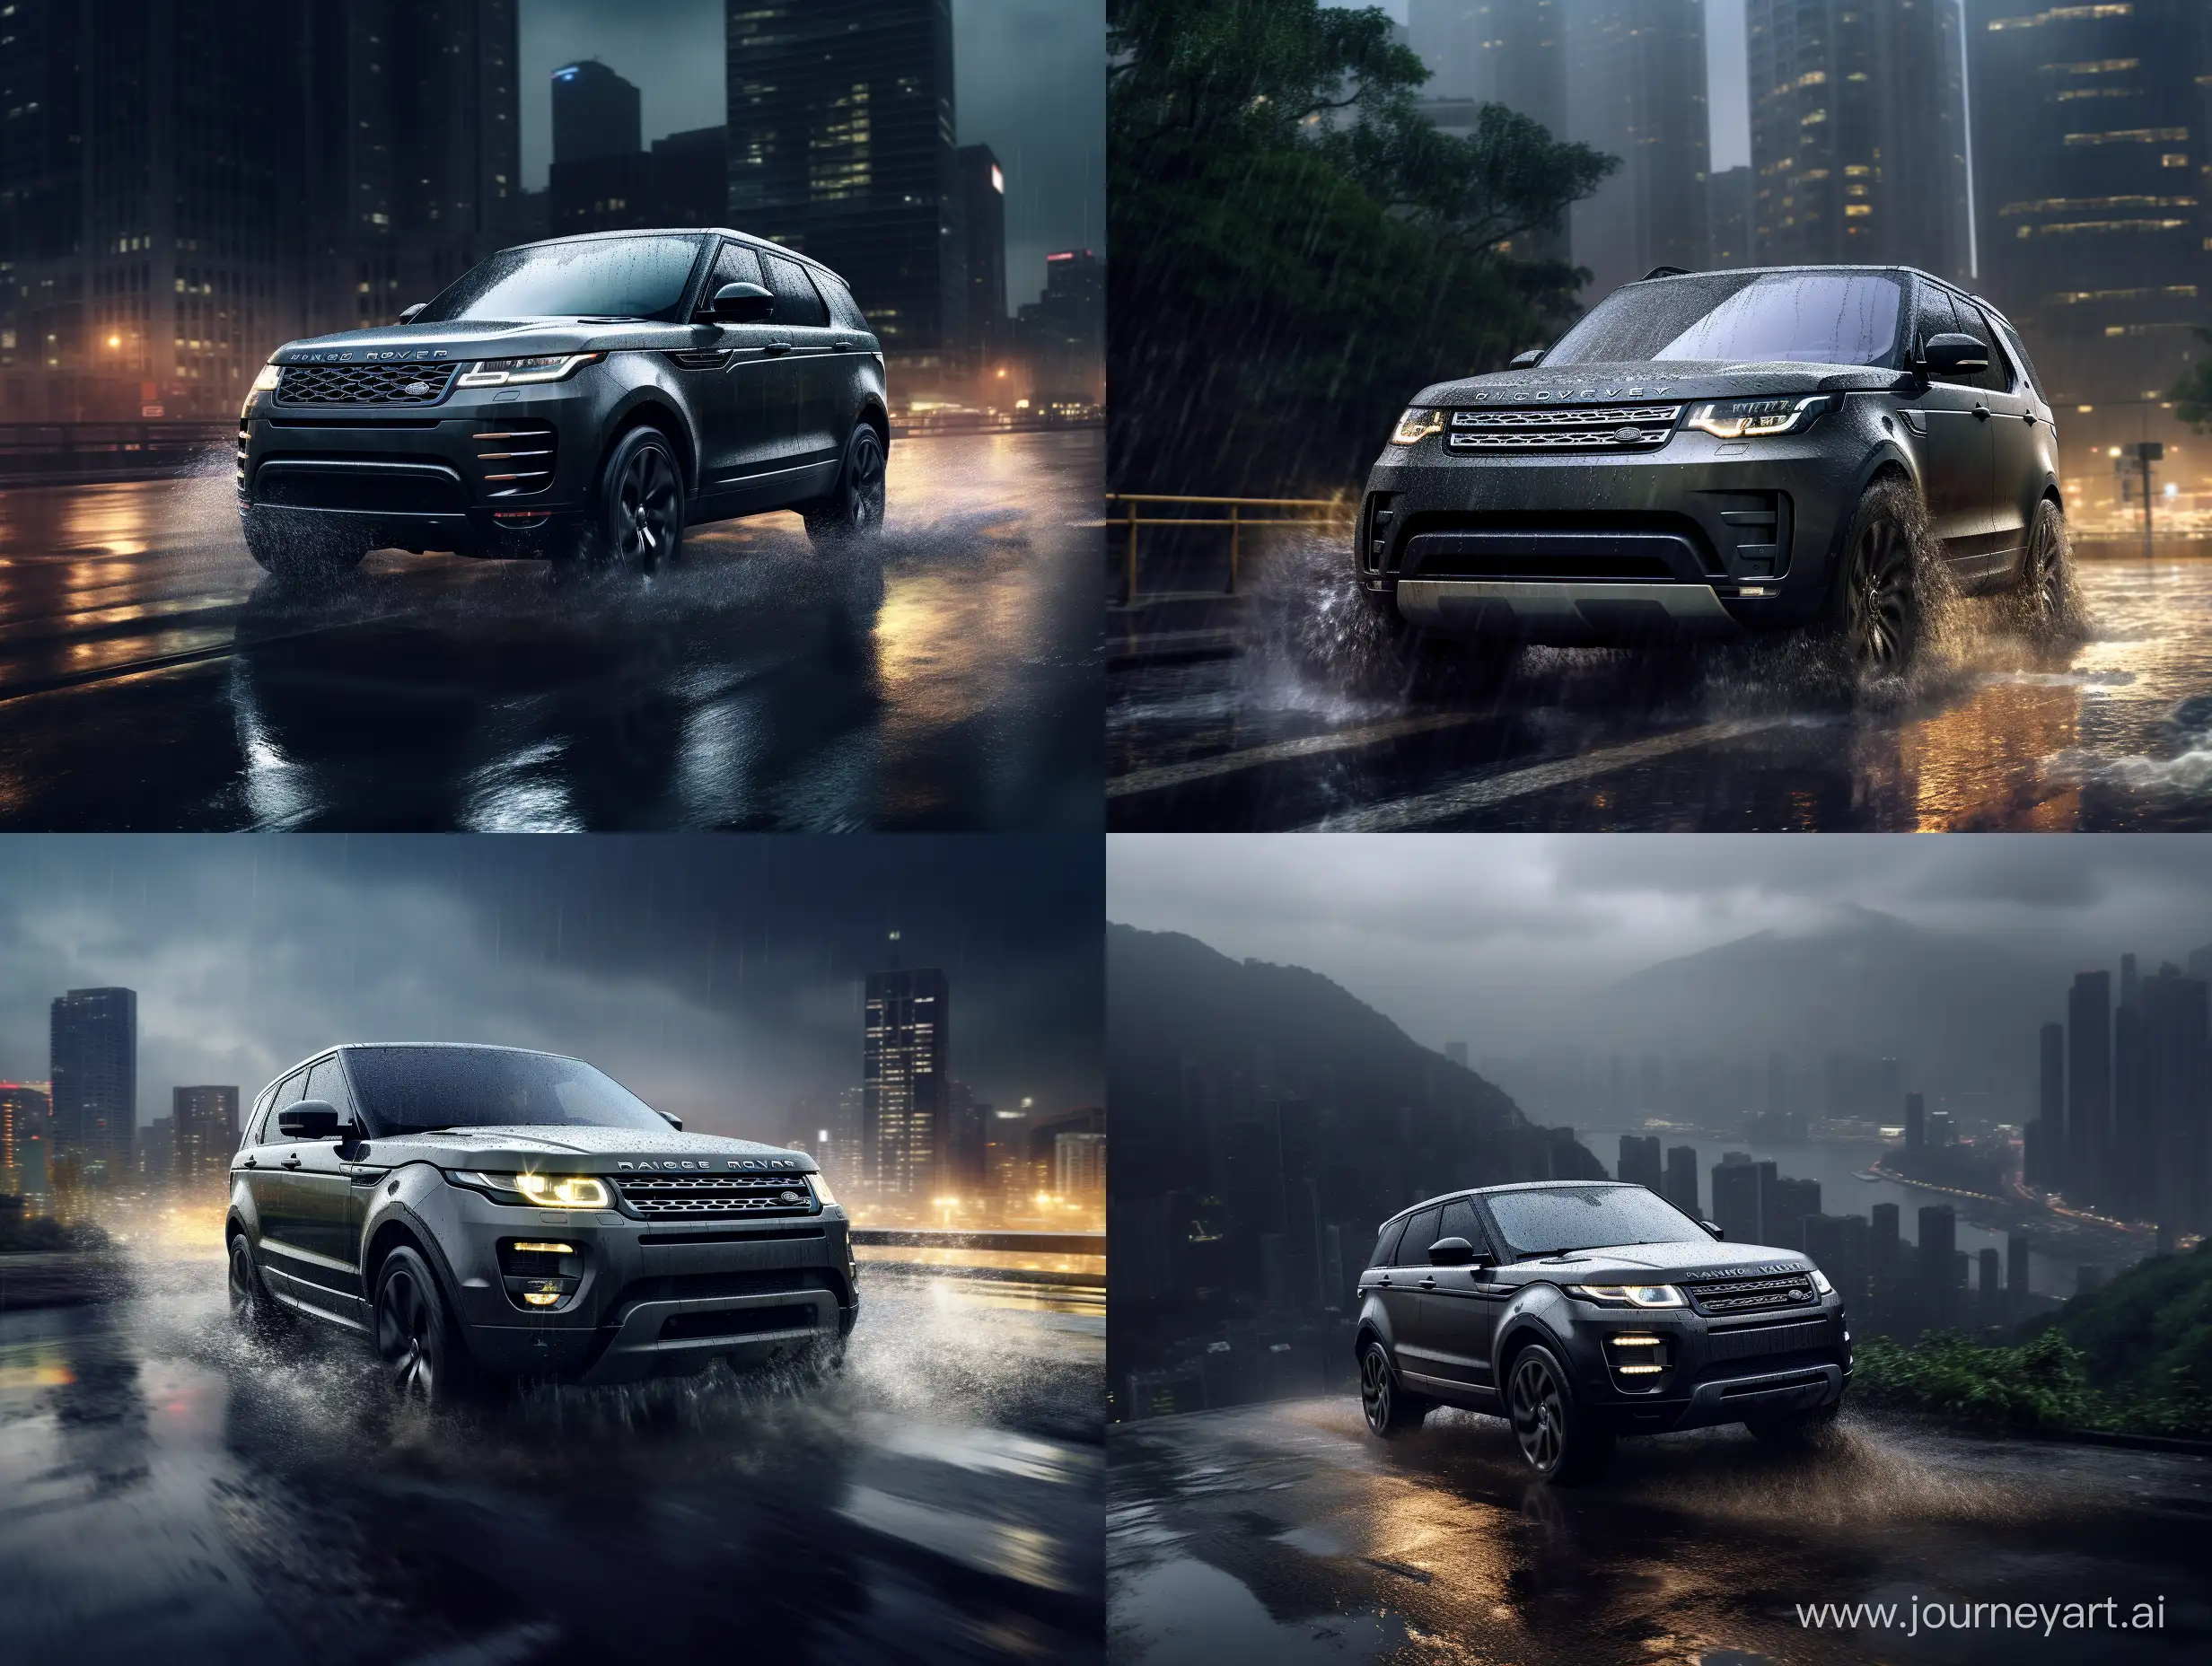 Luxurious-Range-Rover-Cruising-Through-a-Modern-Rainy-City